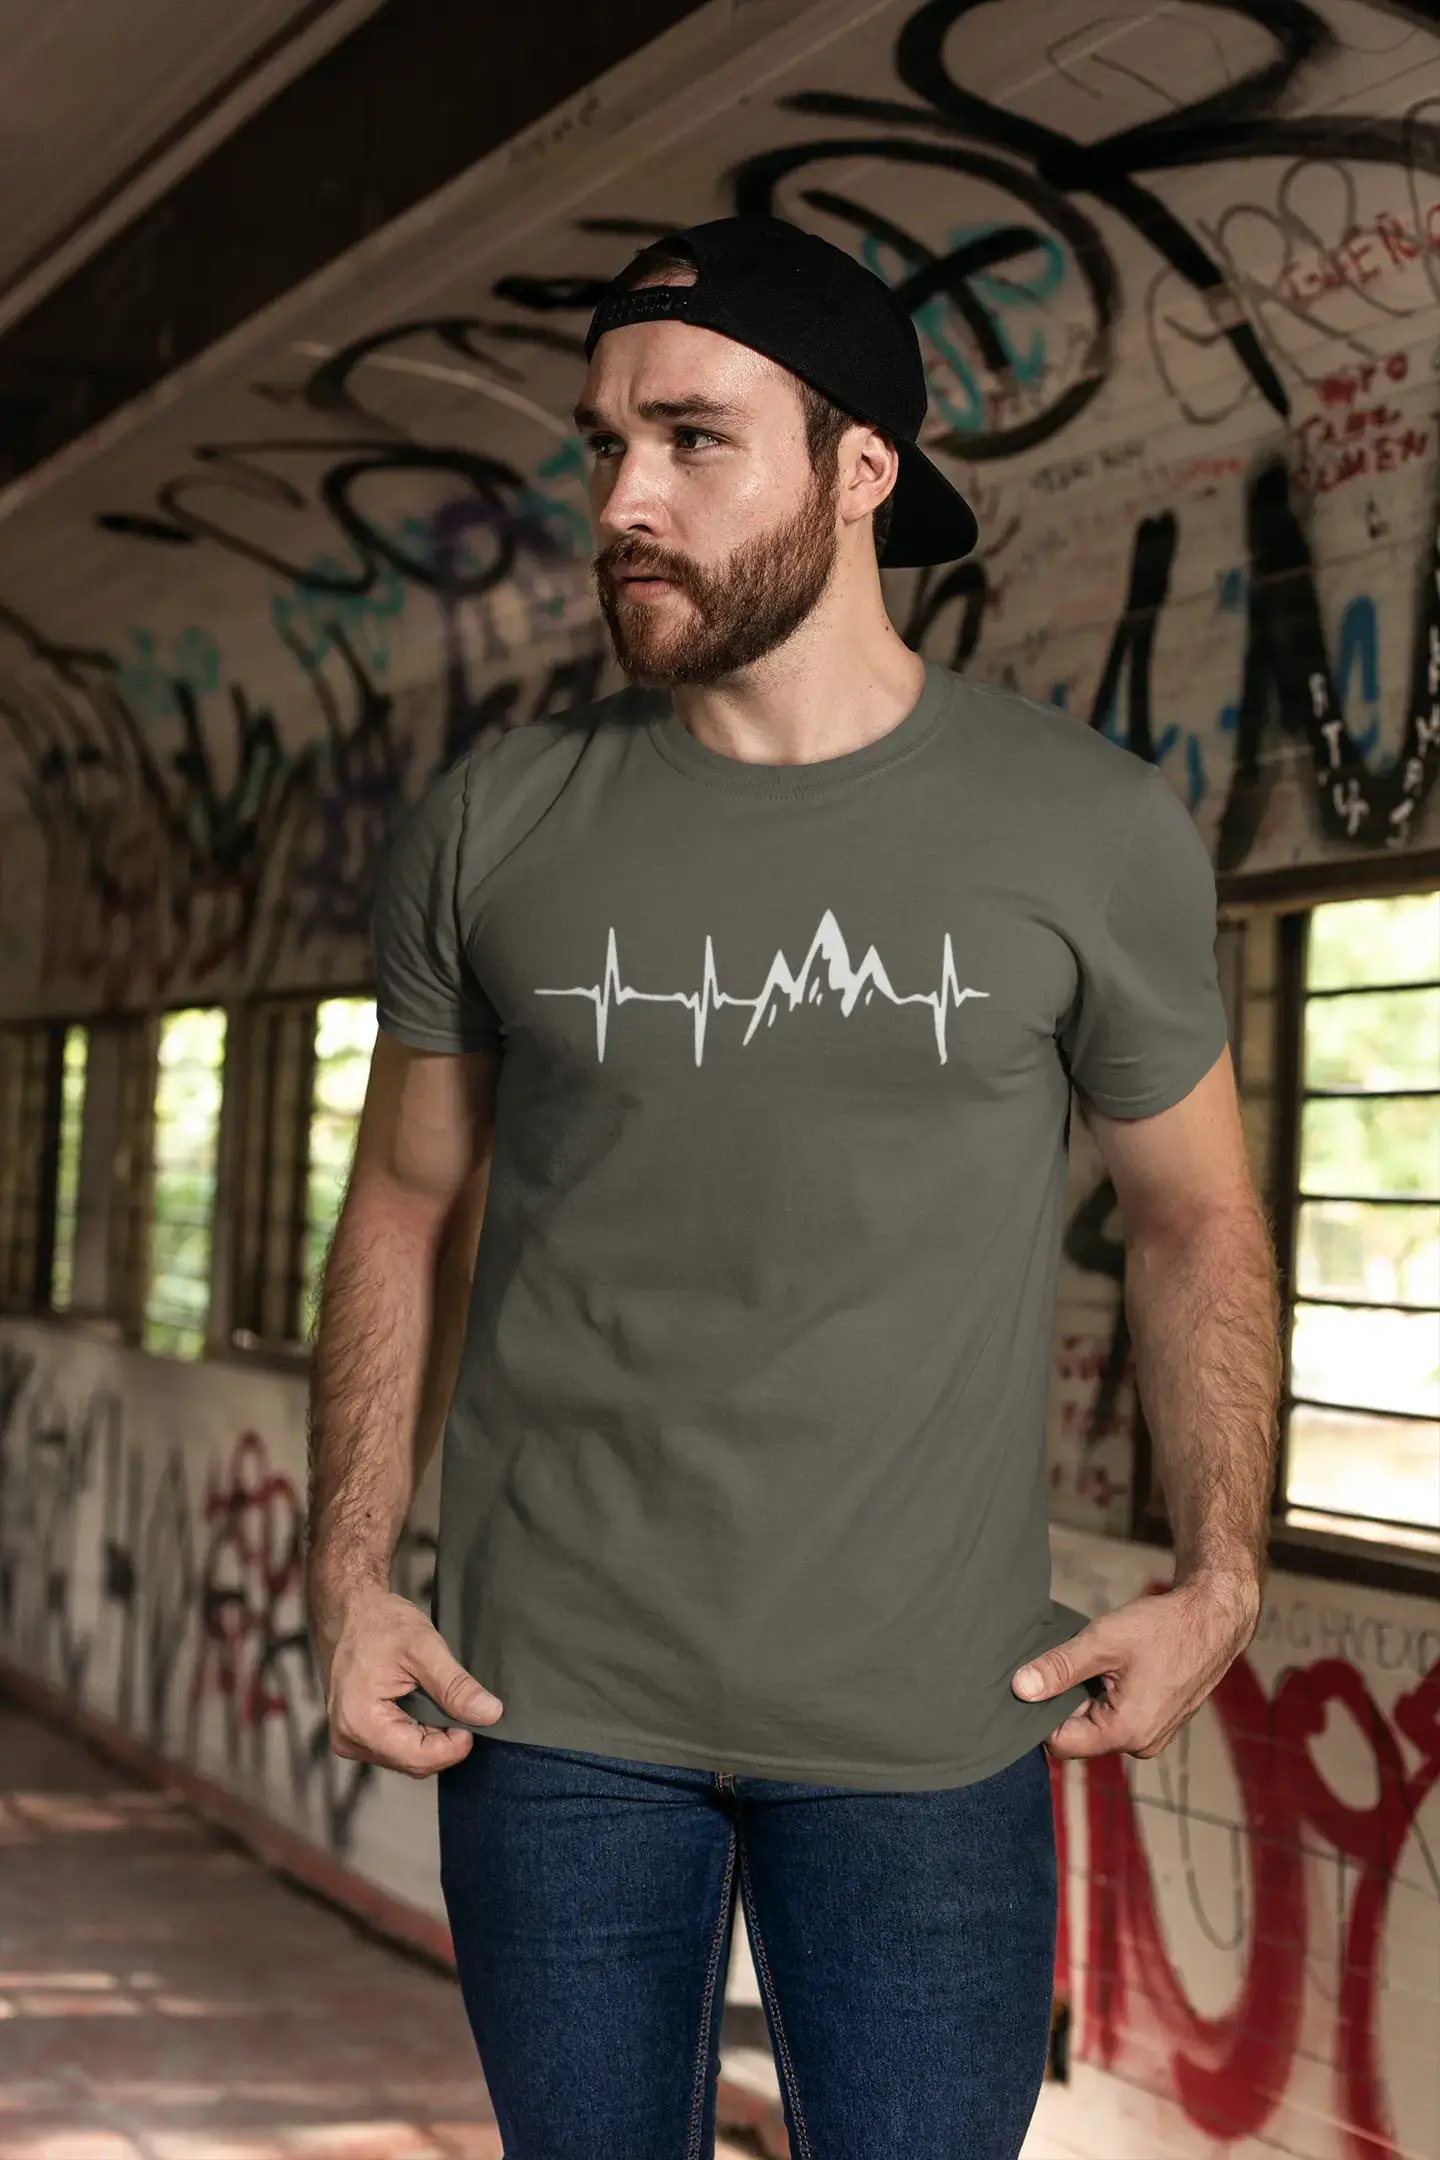 ULTRABASIC - Graphic Printed Men's Mountain Heartbeat T-Shirt White